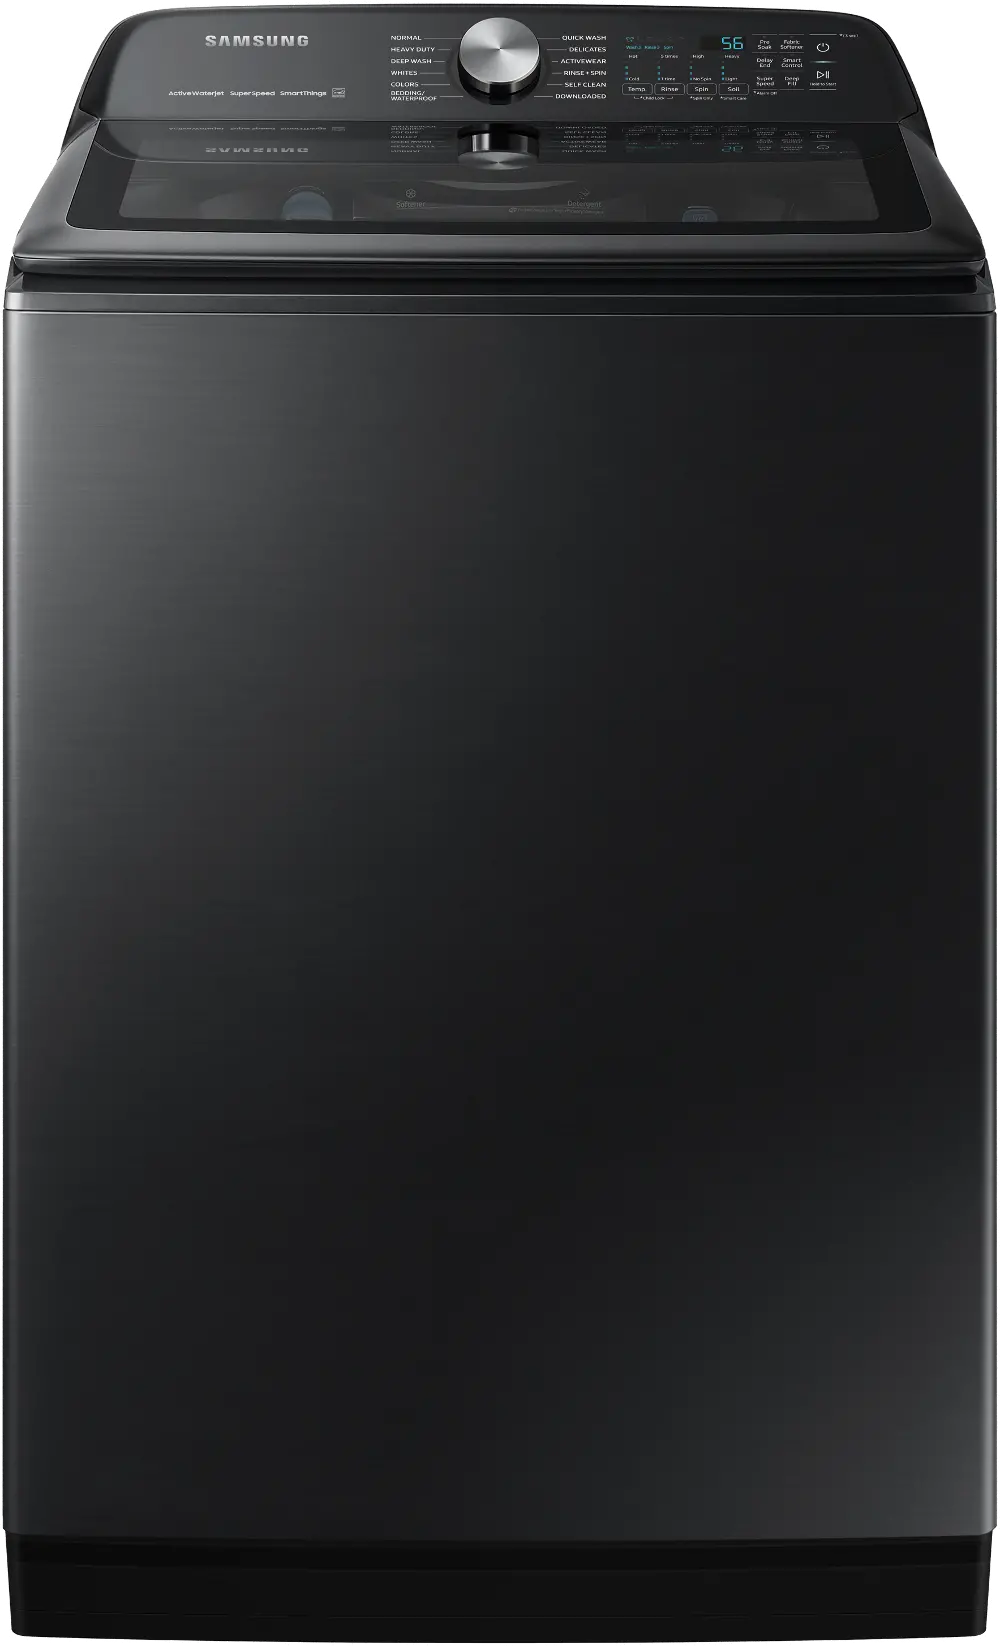 WA52A5500AV Samsung 5.2 cu ft Top Load Washer - Black 52A5500-1